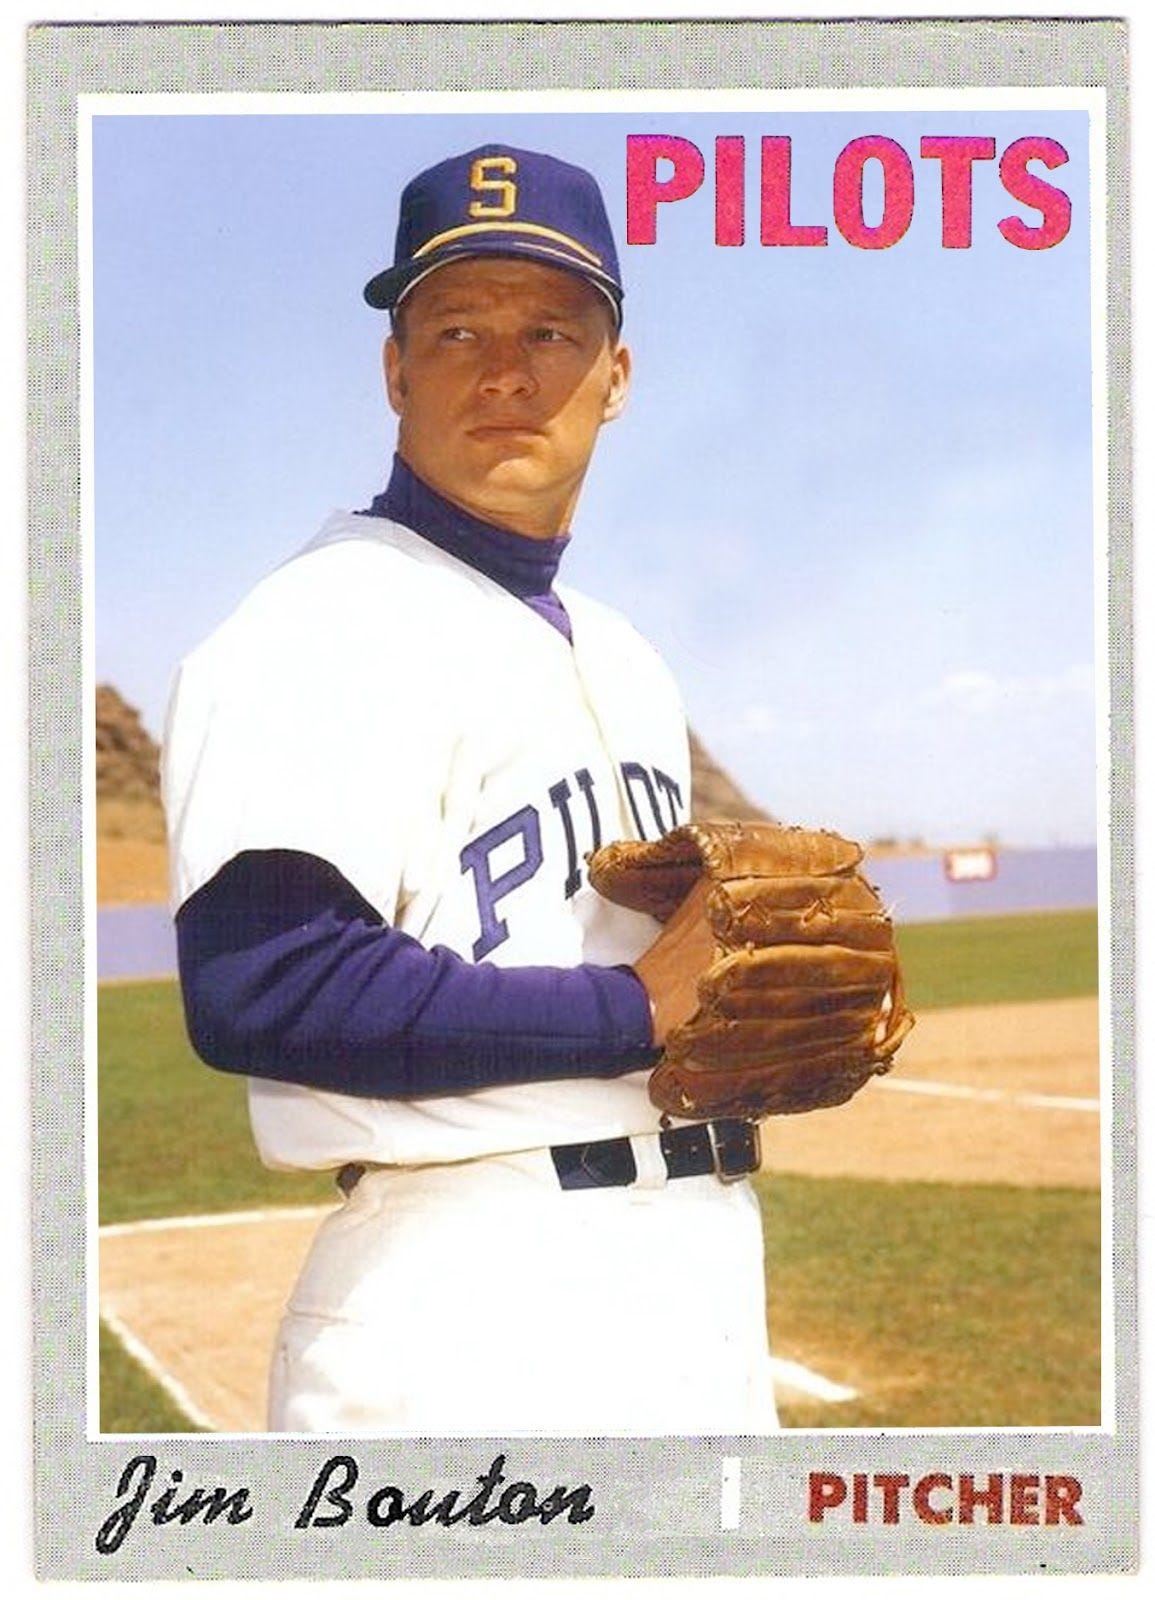 1970 Topps Jim Bouton | Baseball trading cards, Major league baseball  stadiums, Major league baseball teams